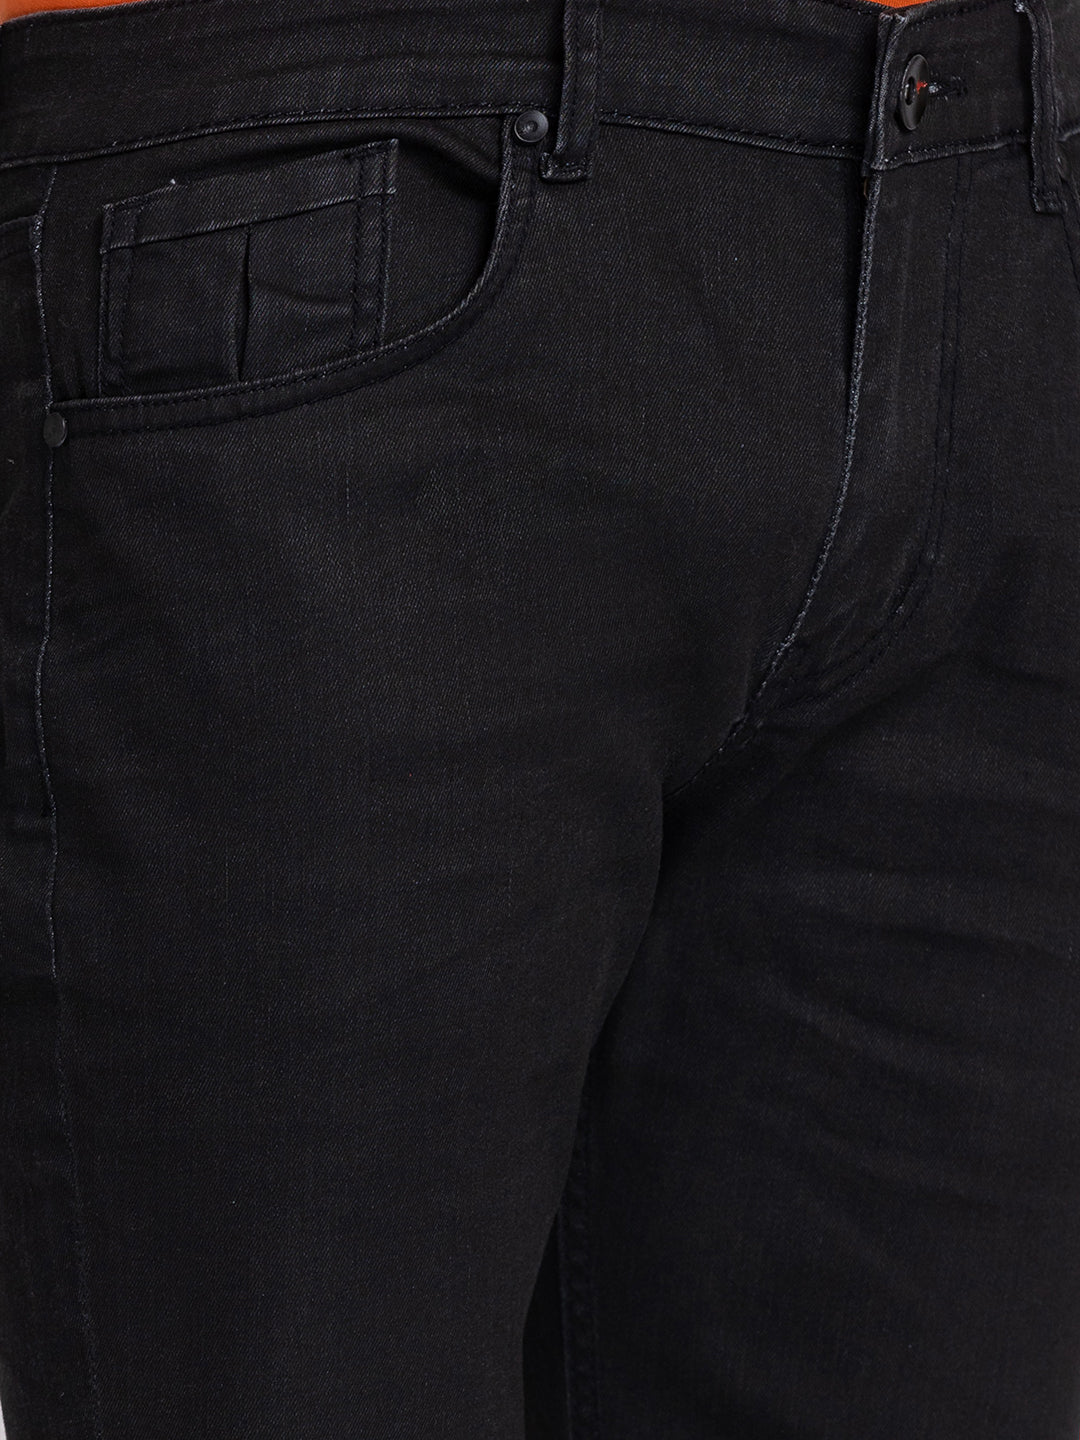 Jet Black Bootcut Jeans with Zipper Bottoms